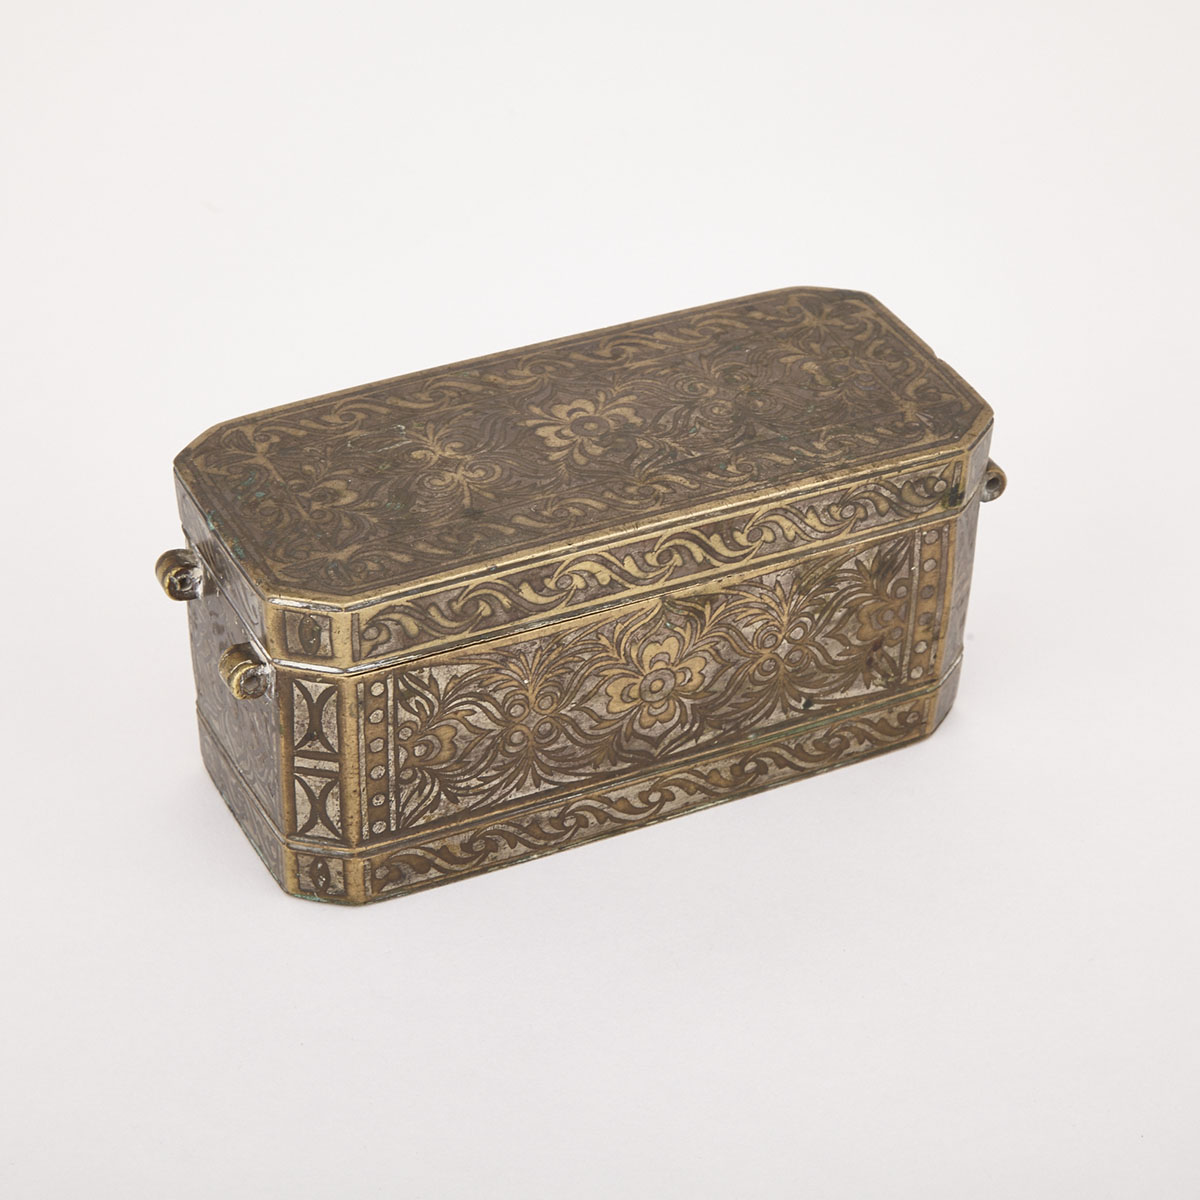 Turkish Incense Box, 17th/18th Century